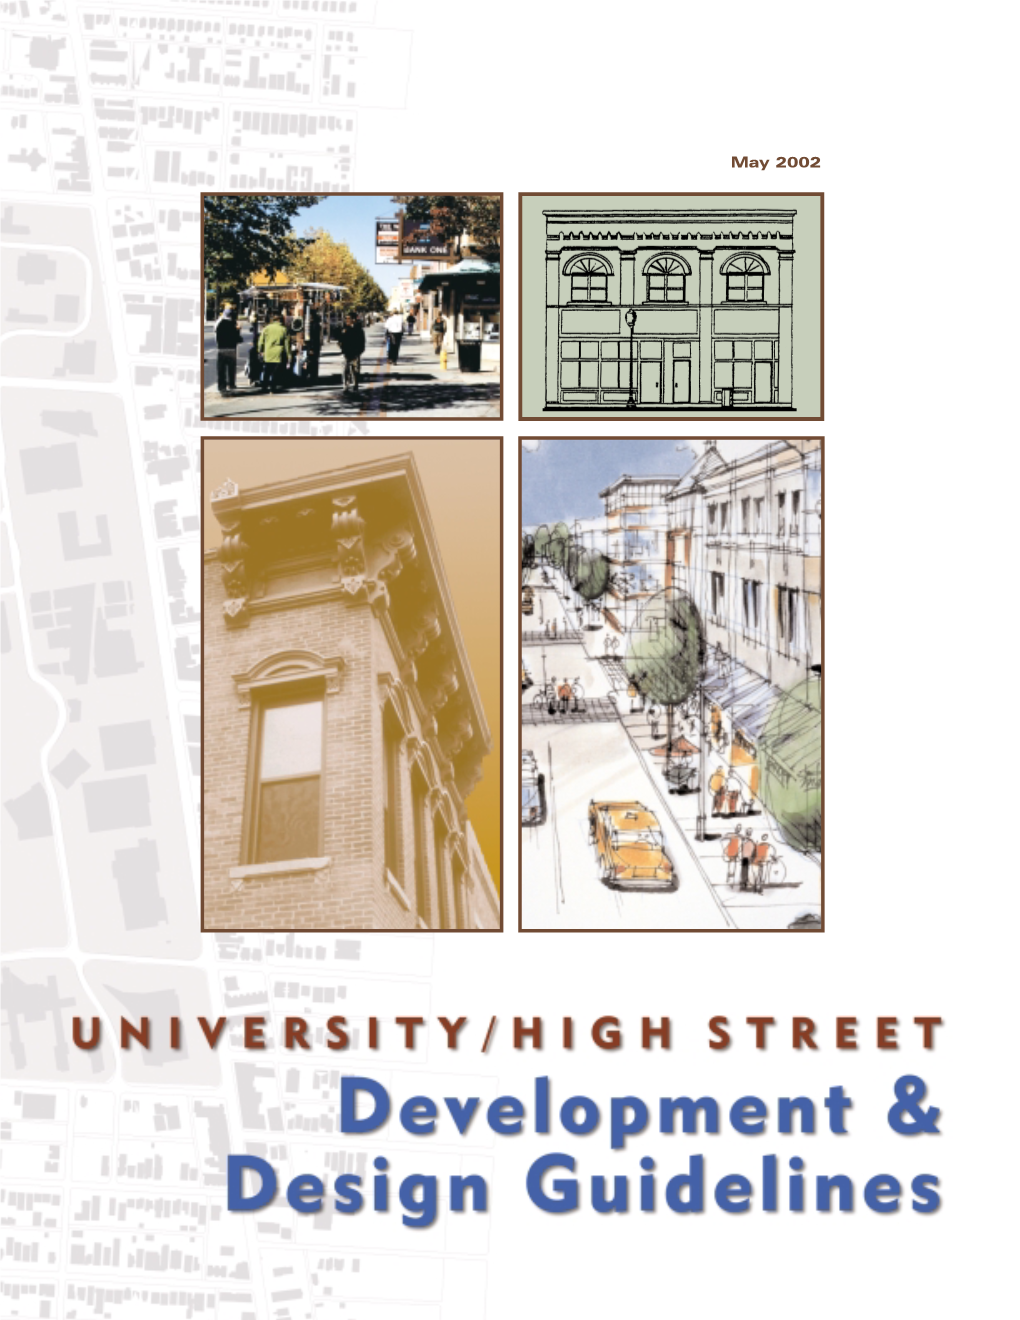 University/High Street Design Guidelines